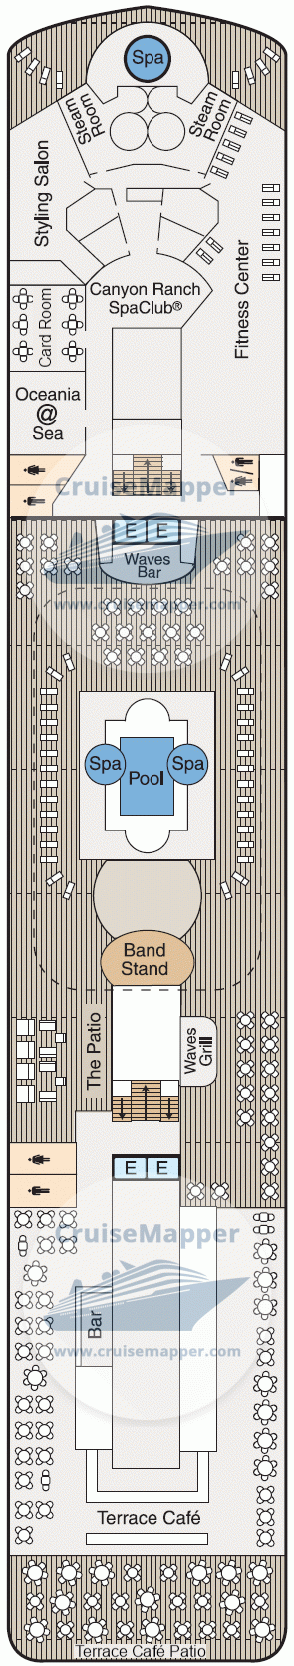 Oceania Insignia Deck 09 - Lido-Pools-Spa